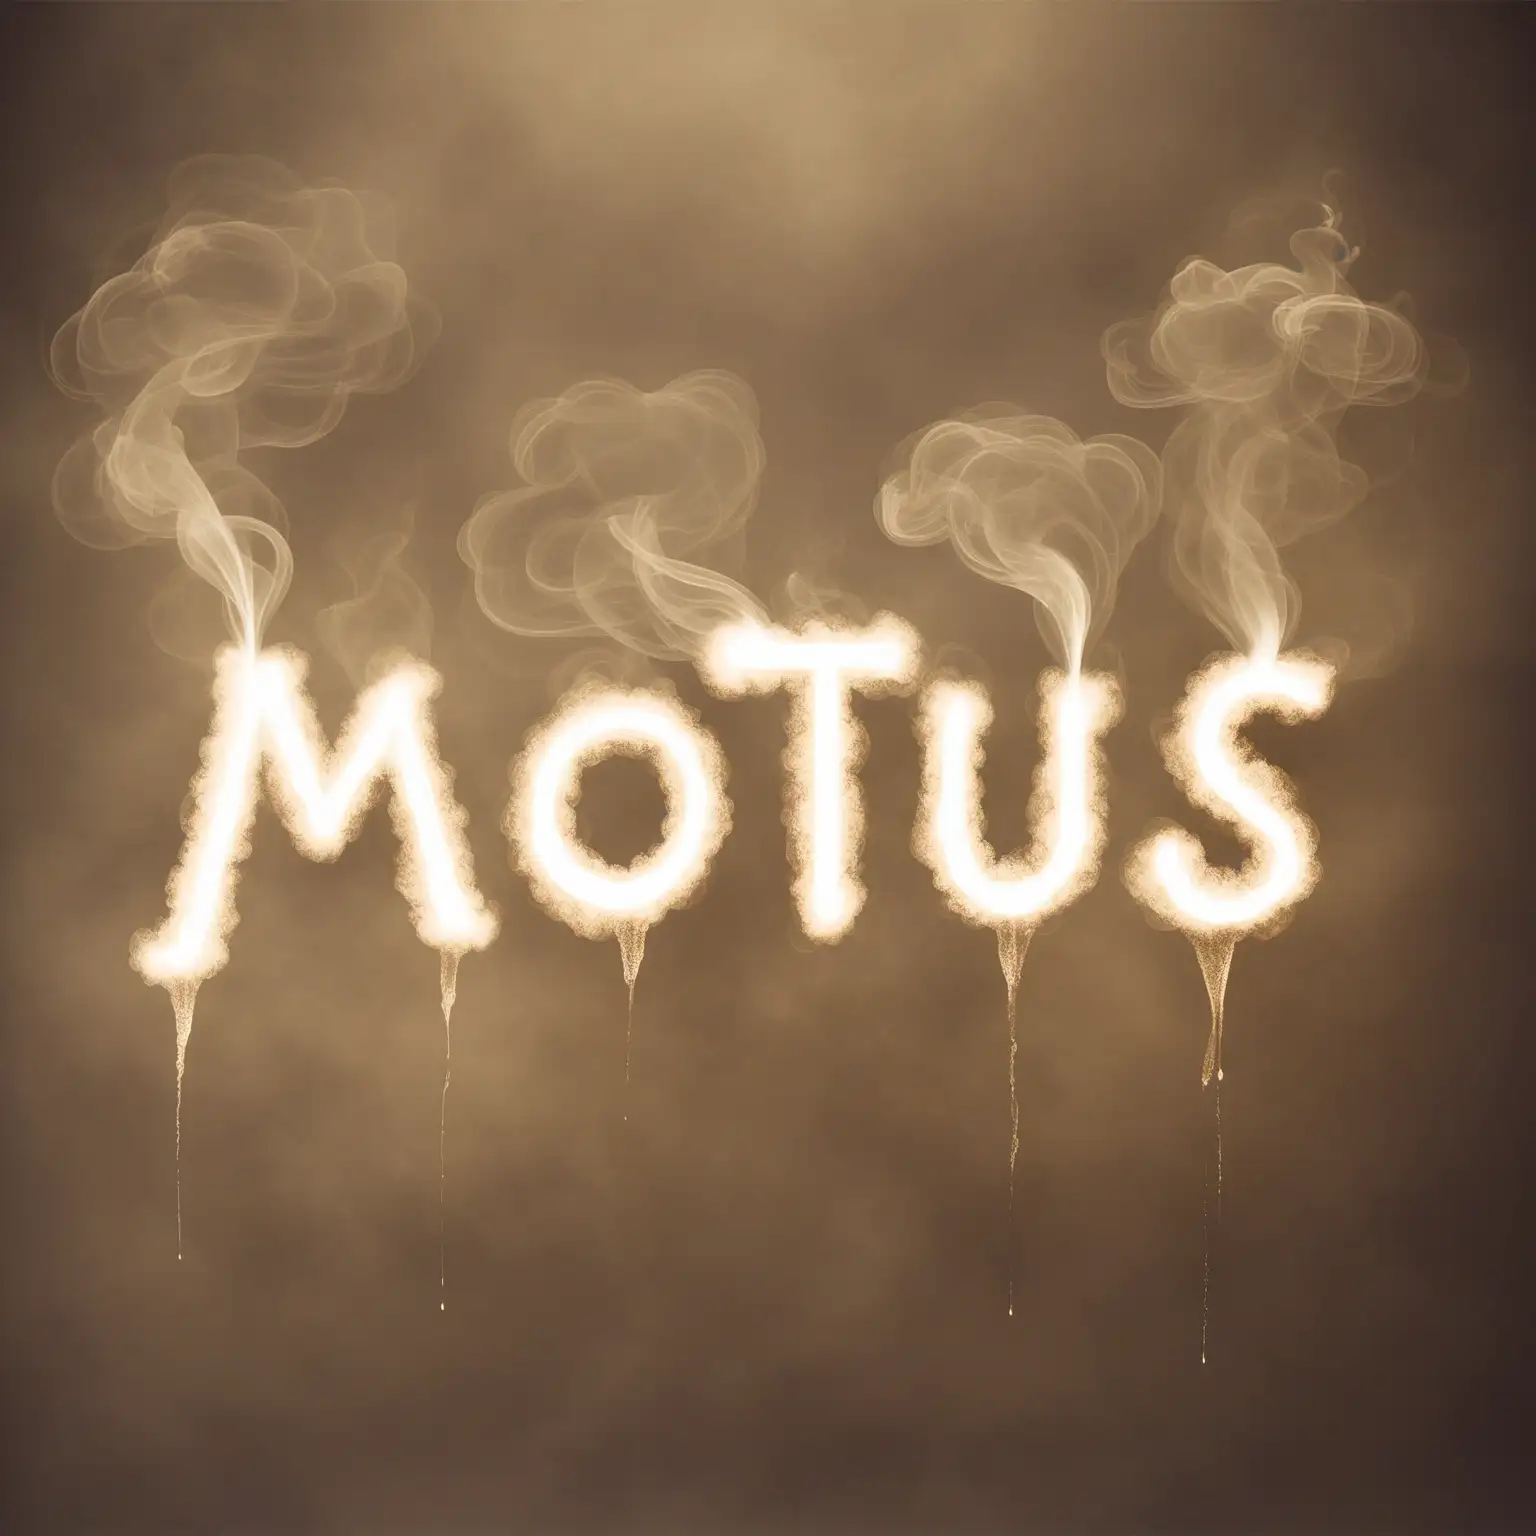 MOTUS written in smoke